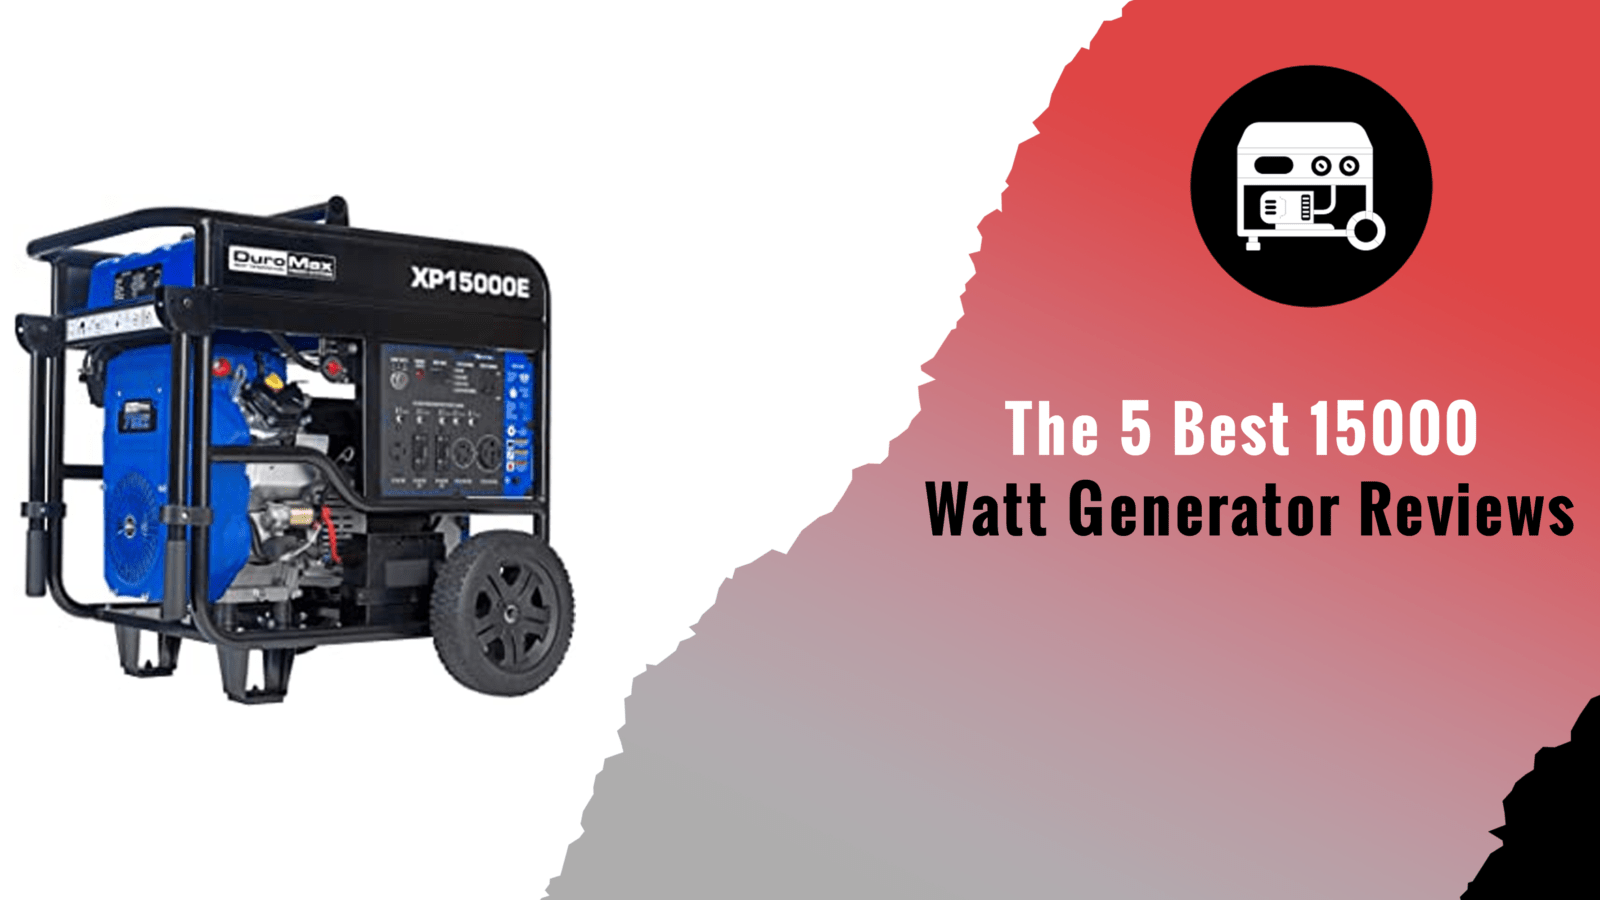 The 5 Best 15000 Watt Generator Reviews